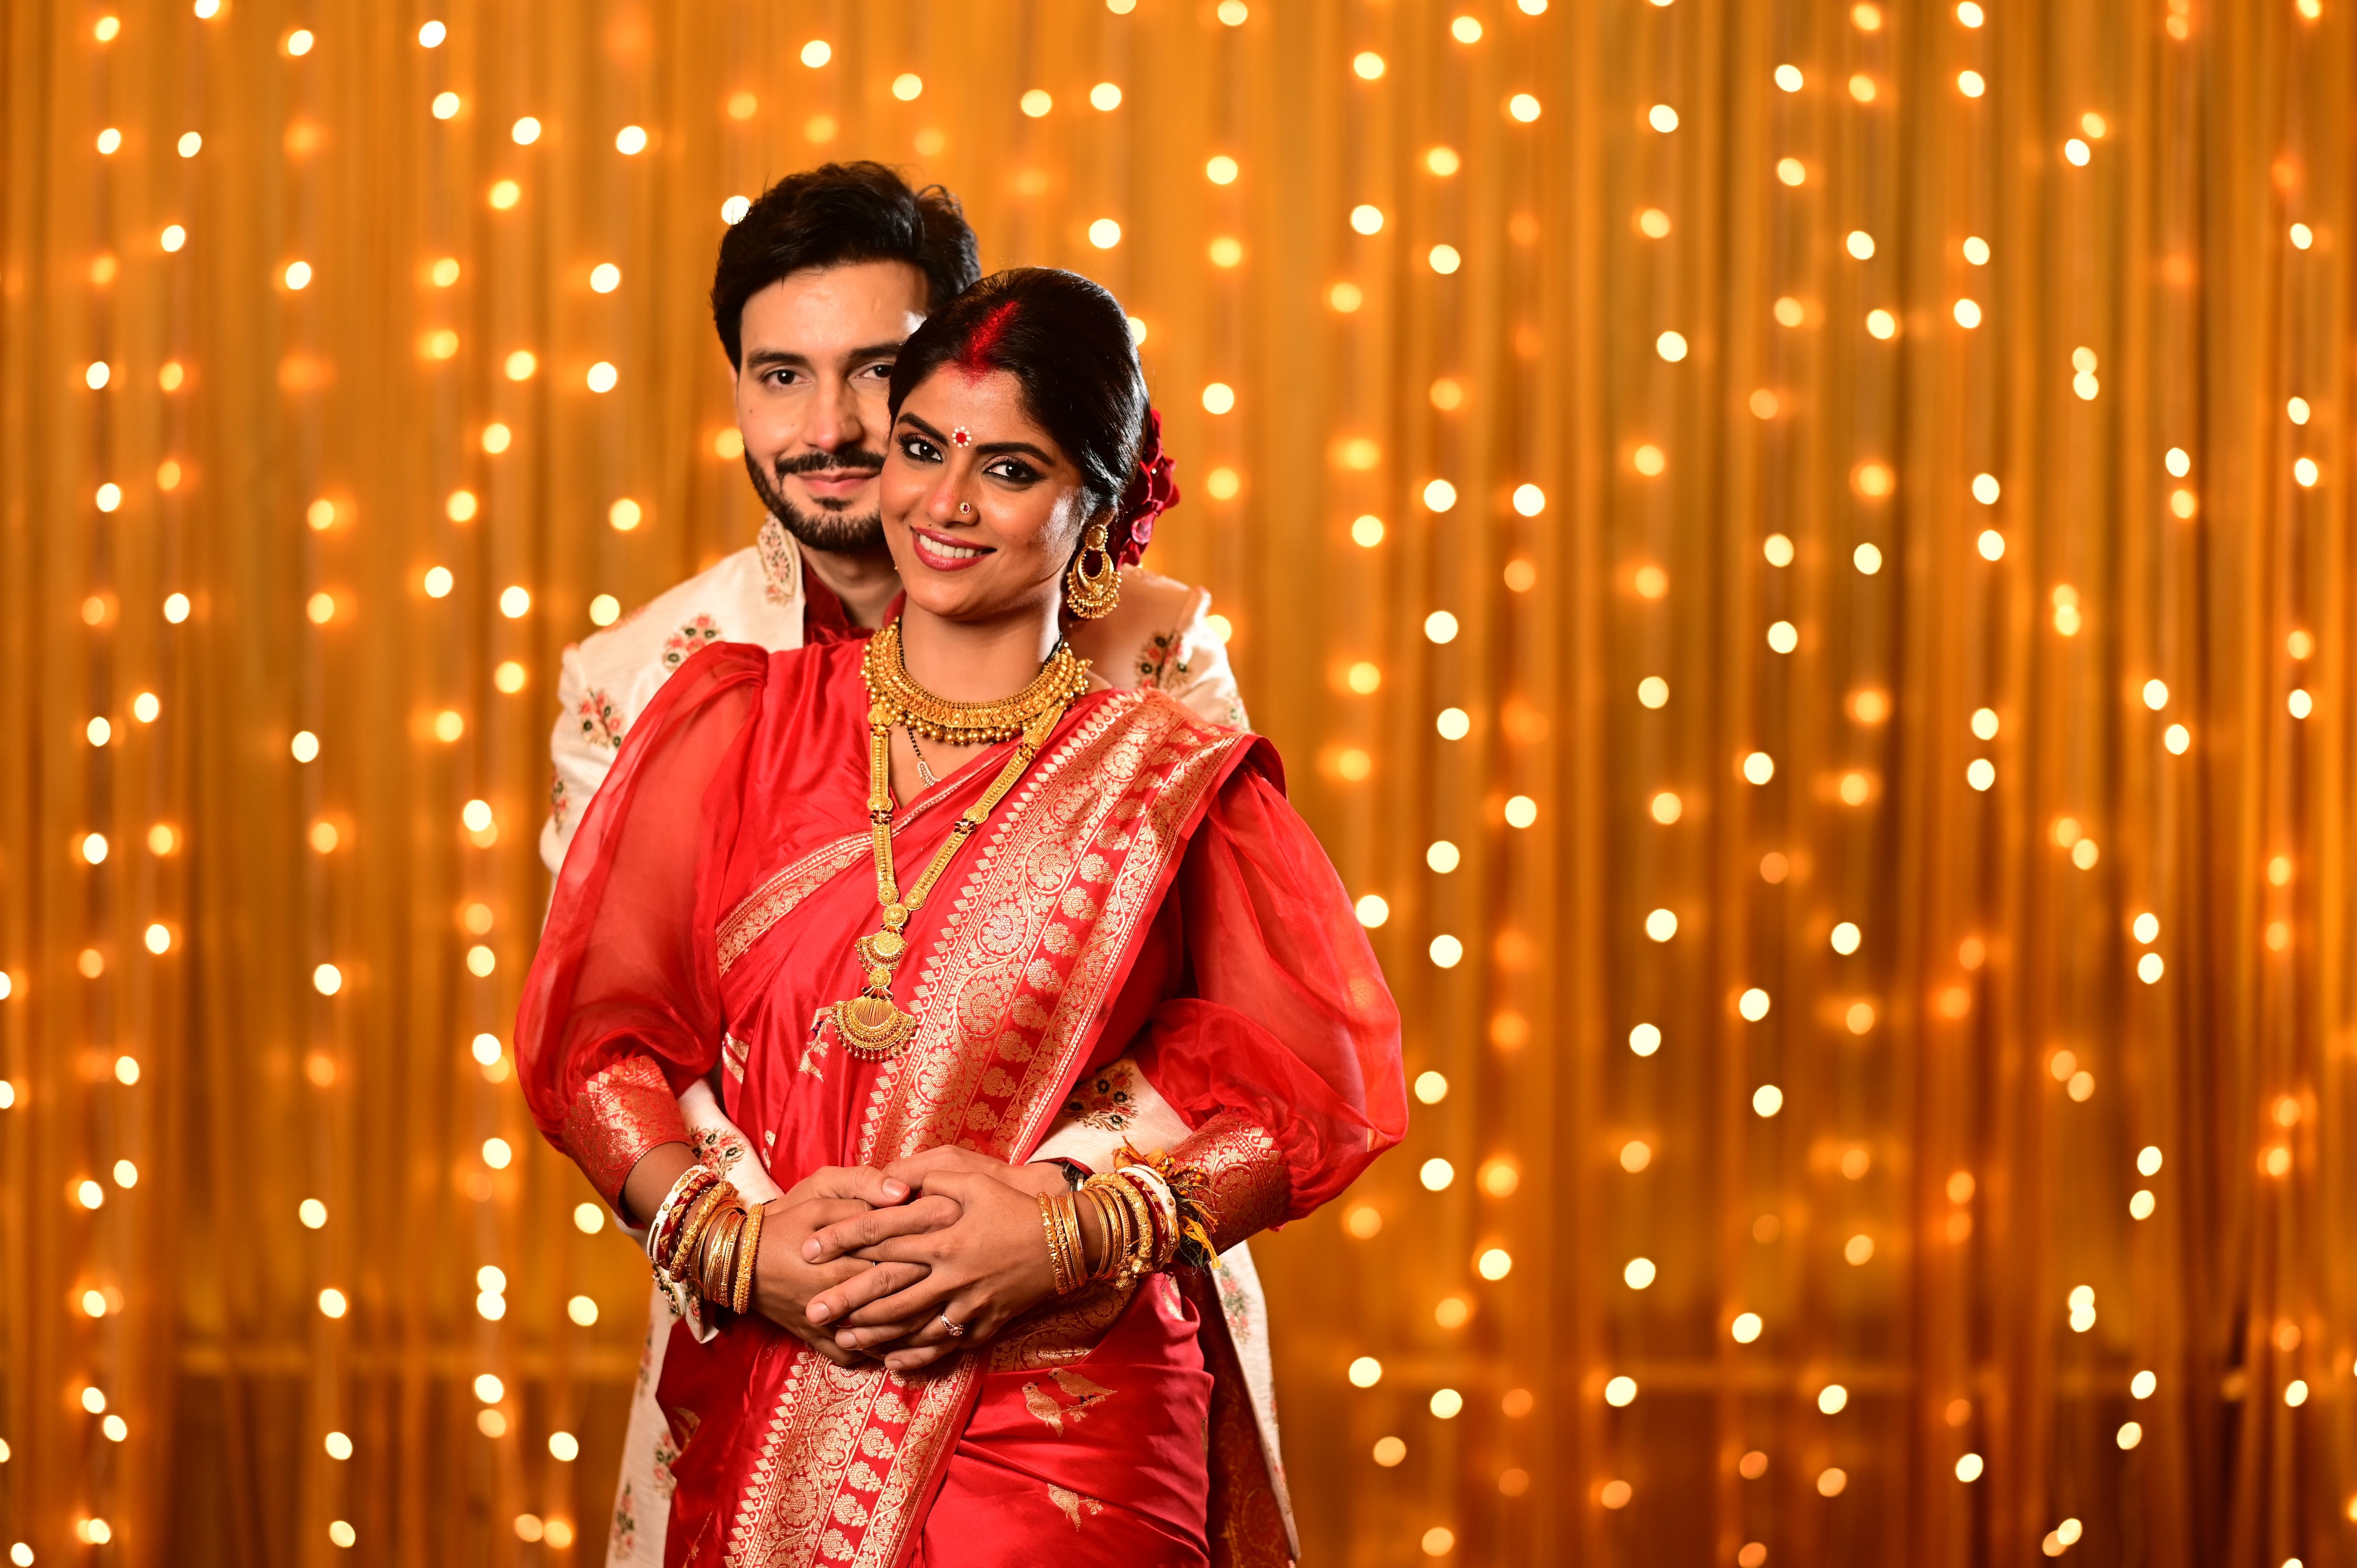 Pradakshinaa Pictures | Best Wedding Photography & Videography | Mumbai